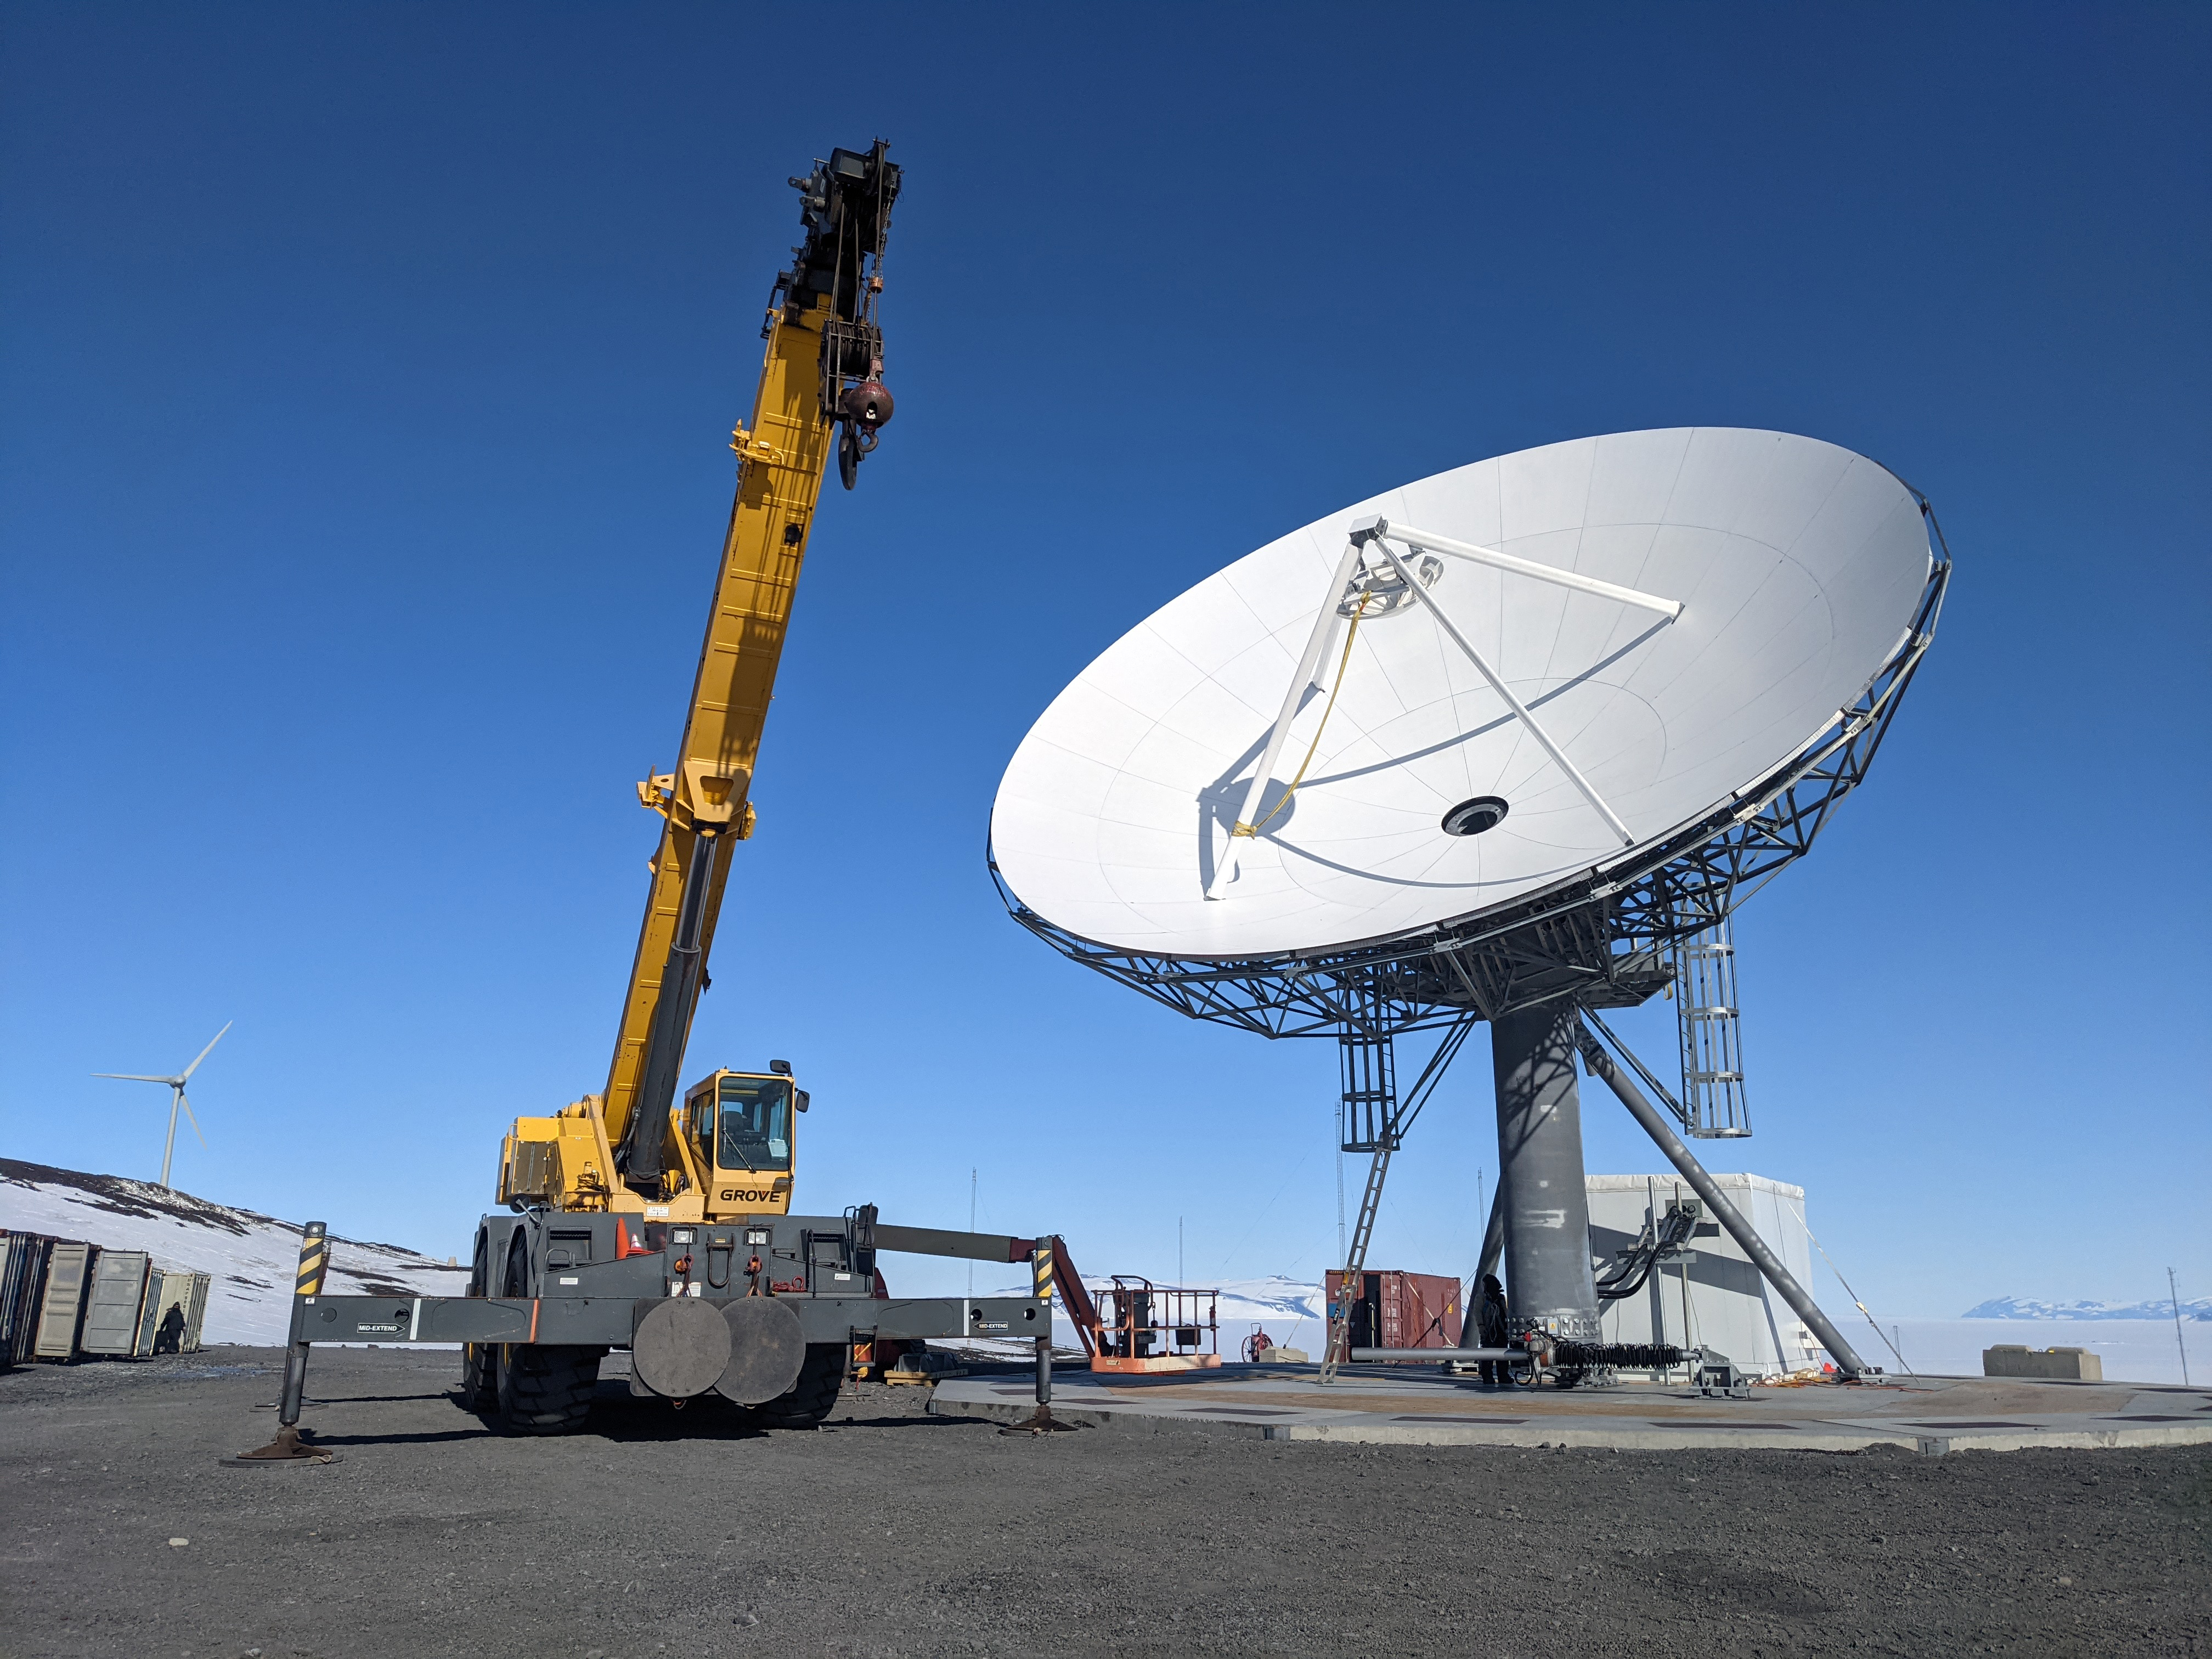 A crane next to a communications satellite dish.